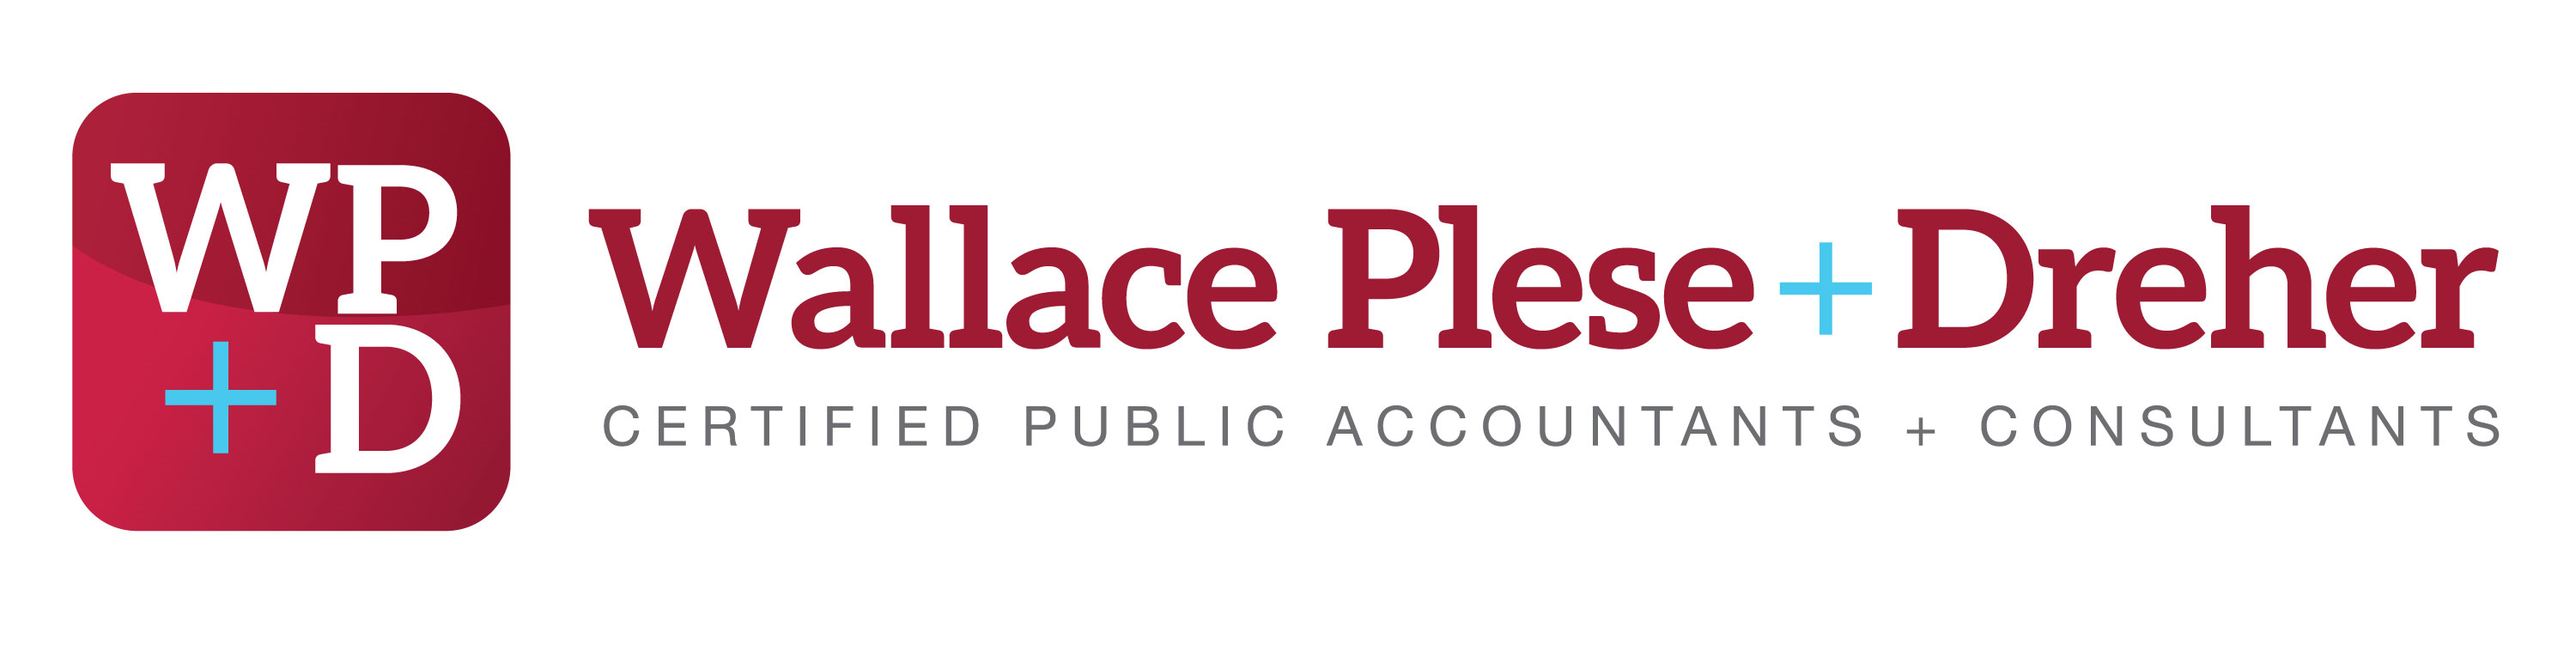 Wallace, Plese + Dreher Company Logo